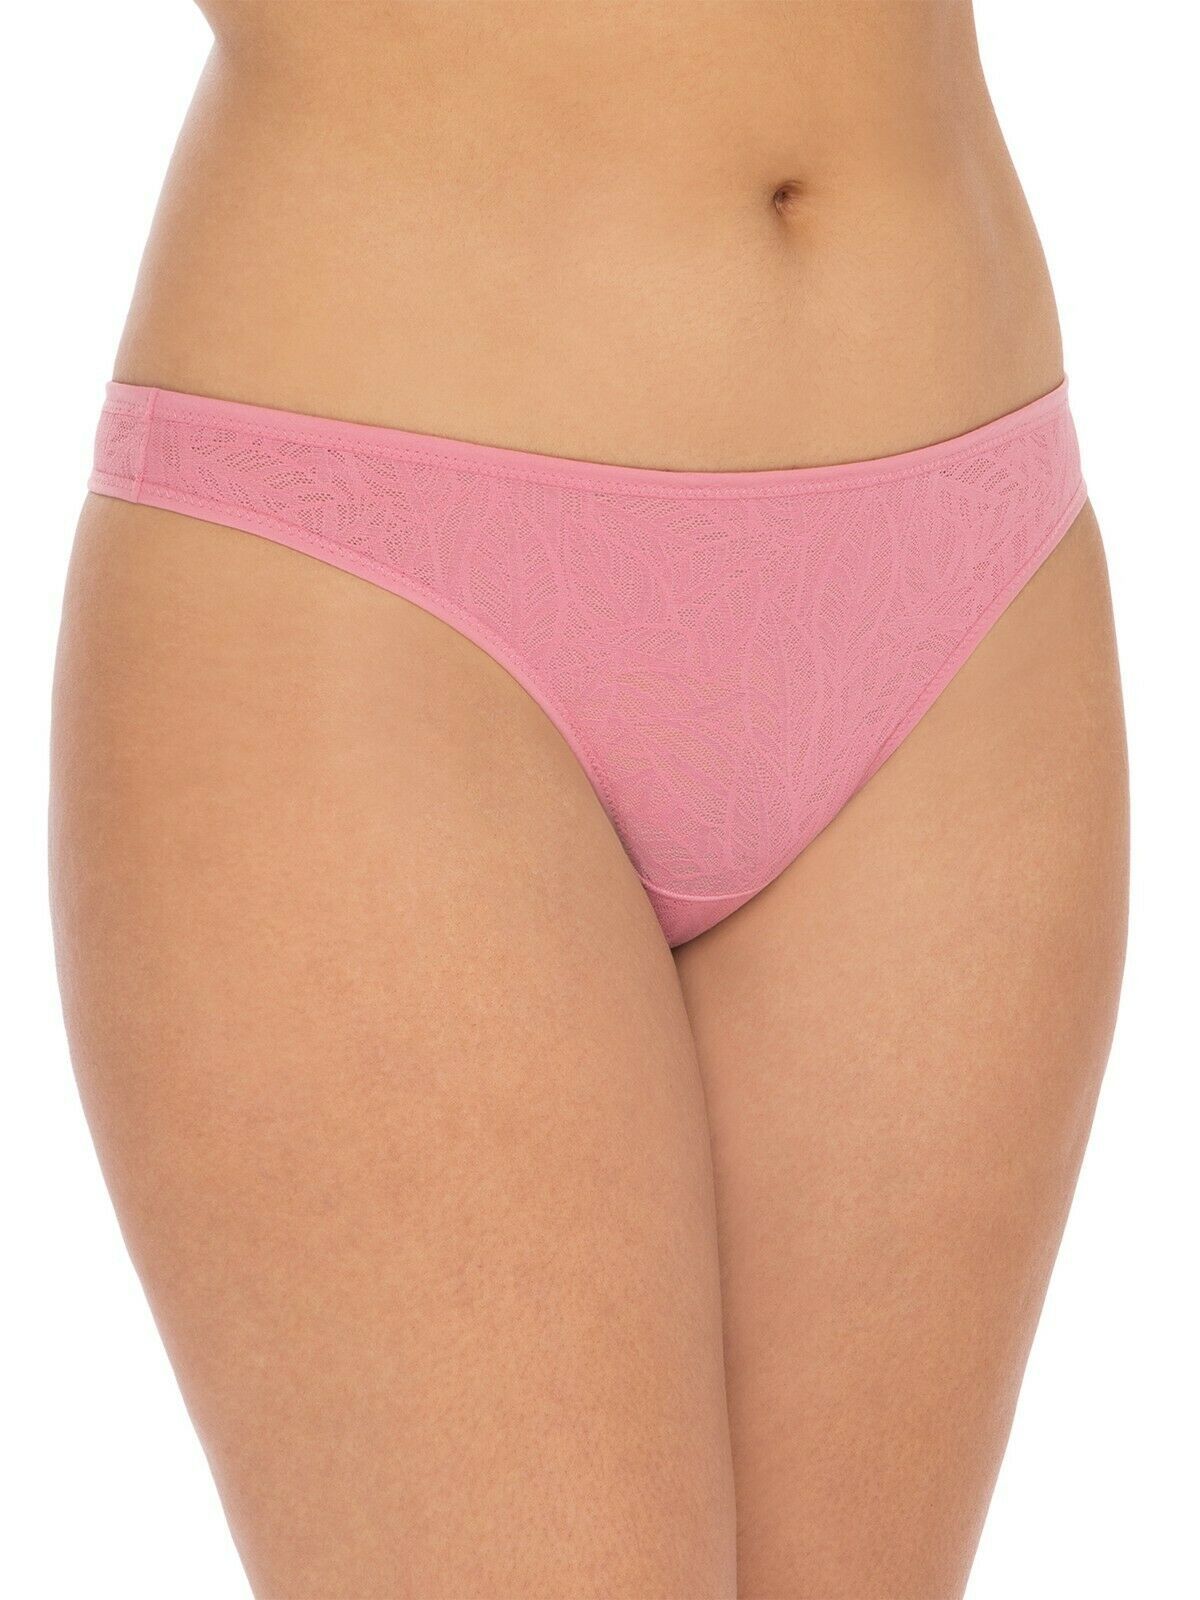 Secret Treasures Women's Lace Leaf Thong Panties Size LARGE Pink 1 Pair